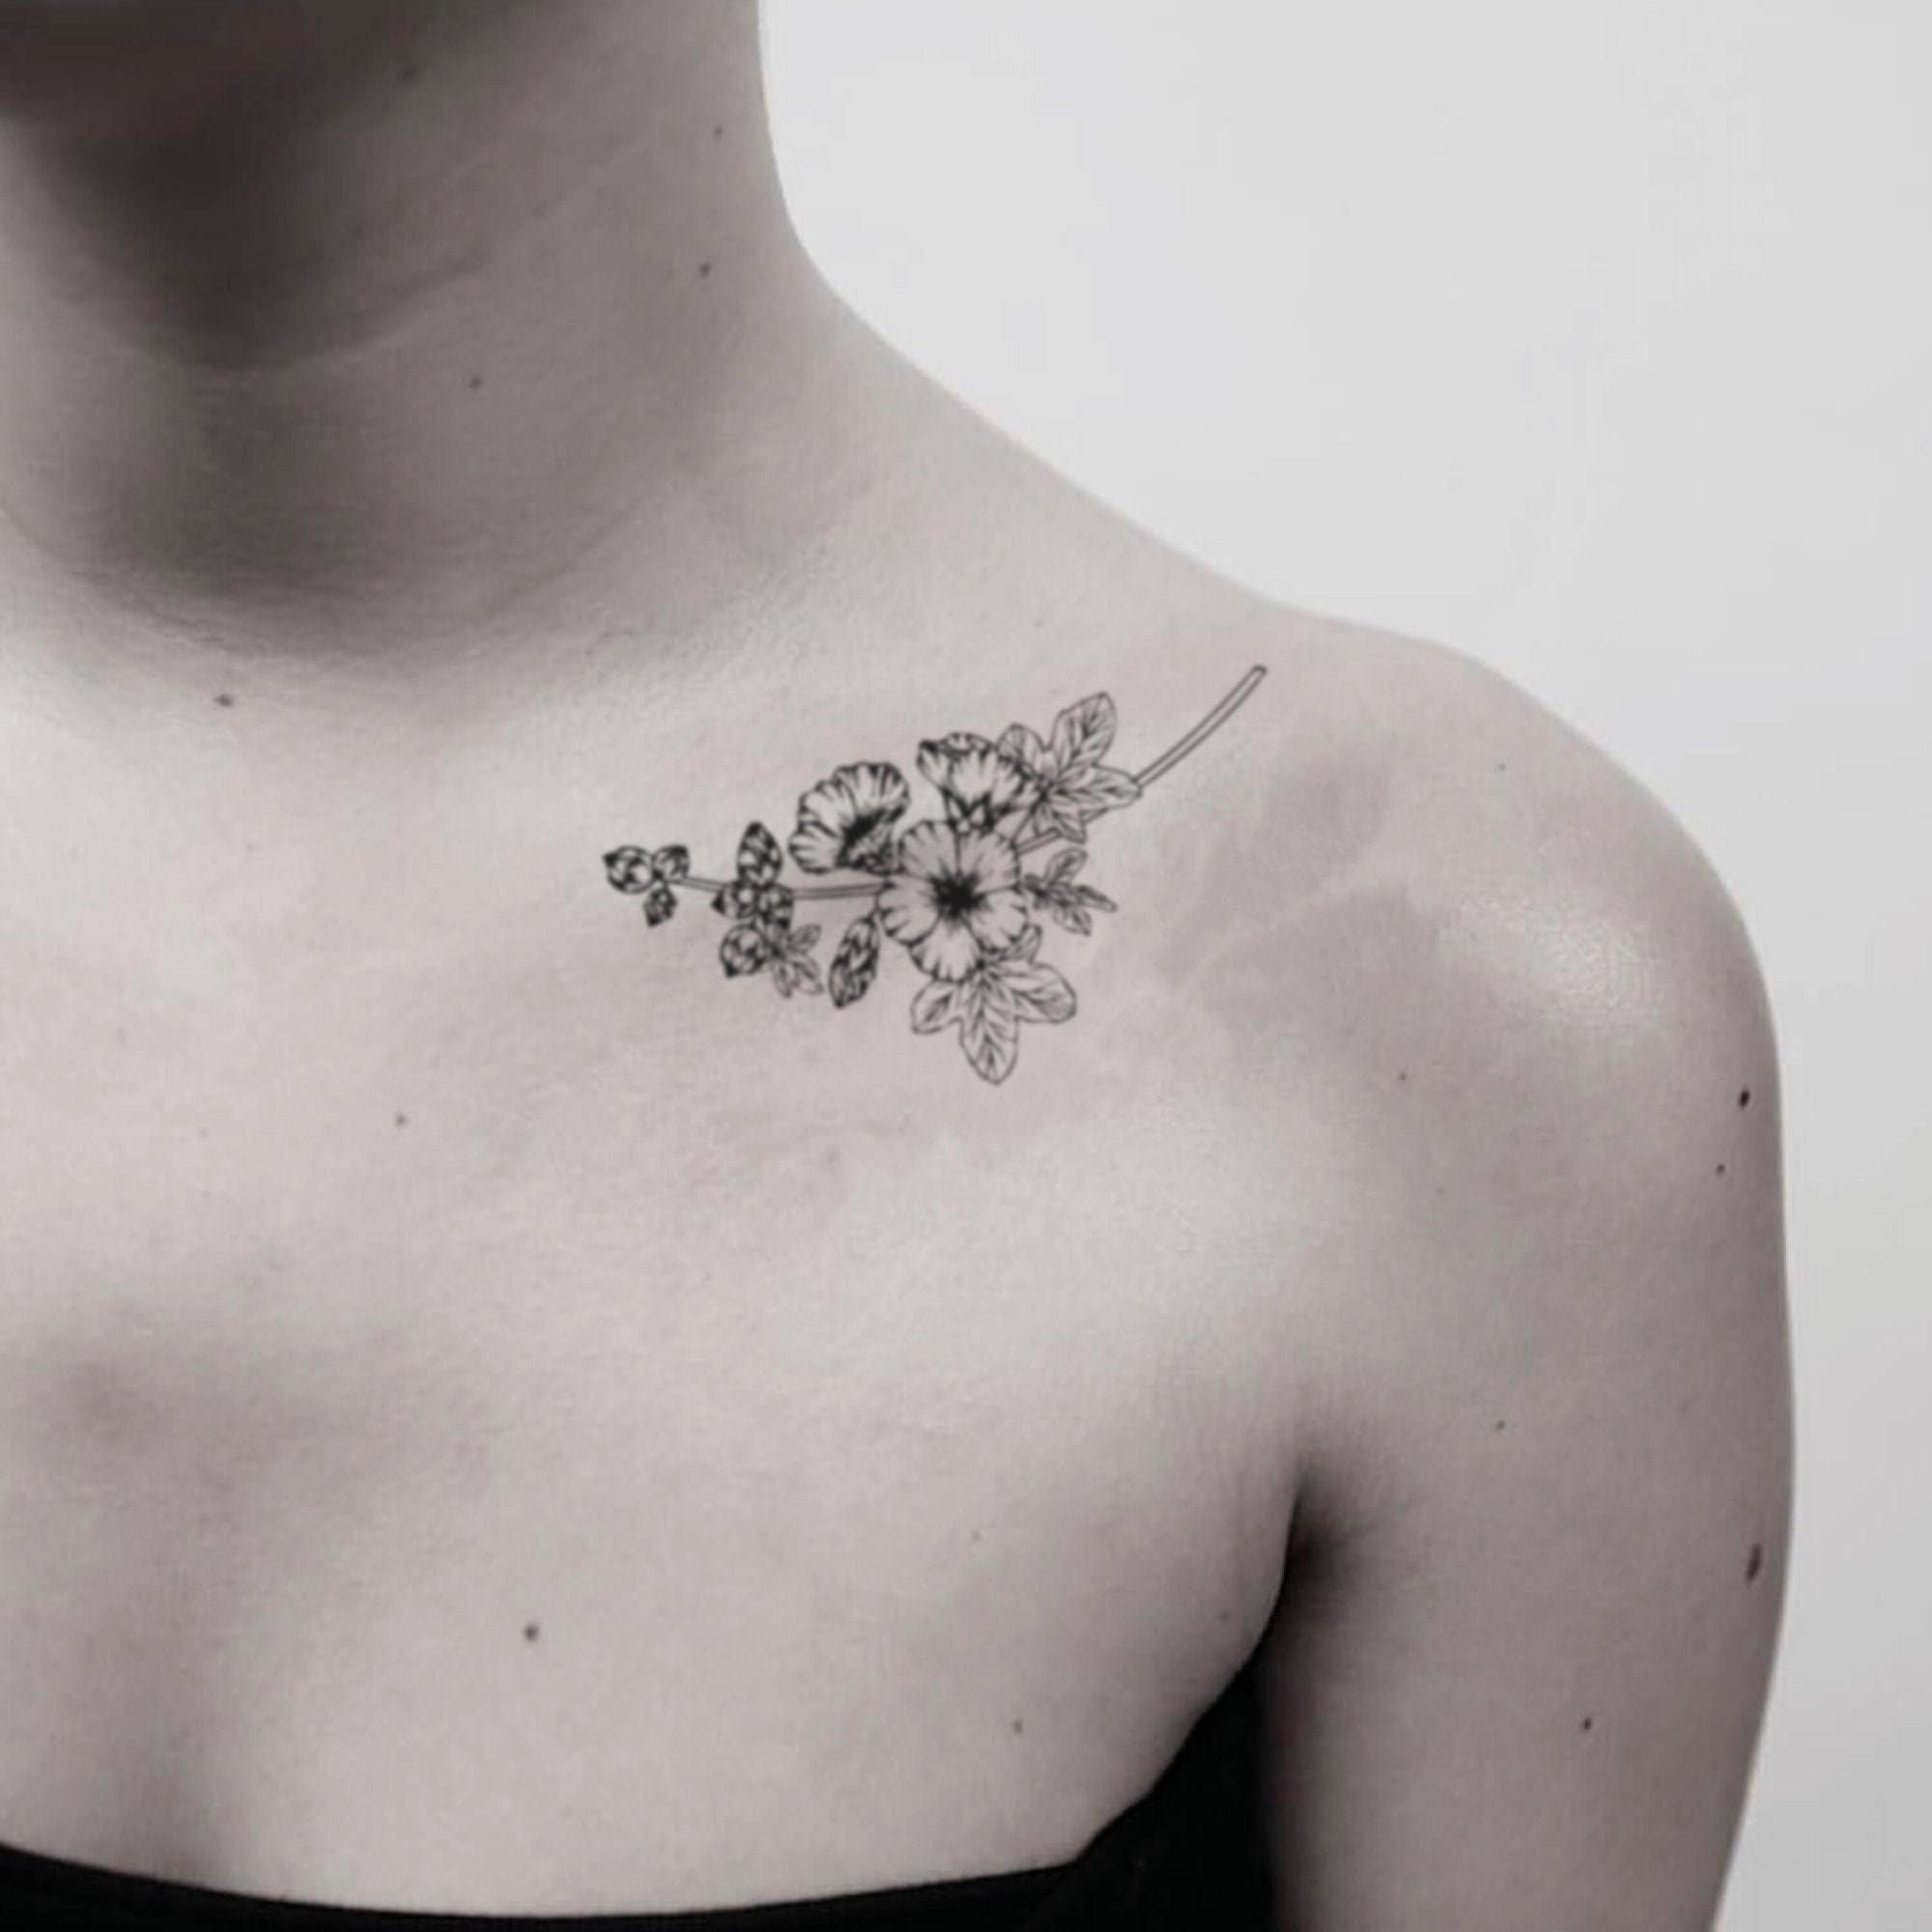 Tattoo tagged with: flower, fine line, fraukekatze, line art, hollyhock,  facebook, nature, blackwork, twitter, inner forearm, medium size |  inked-app.com